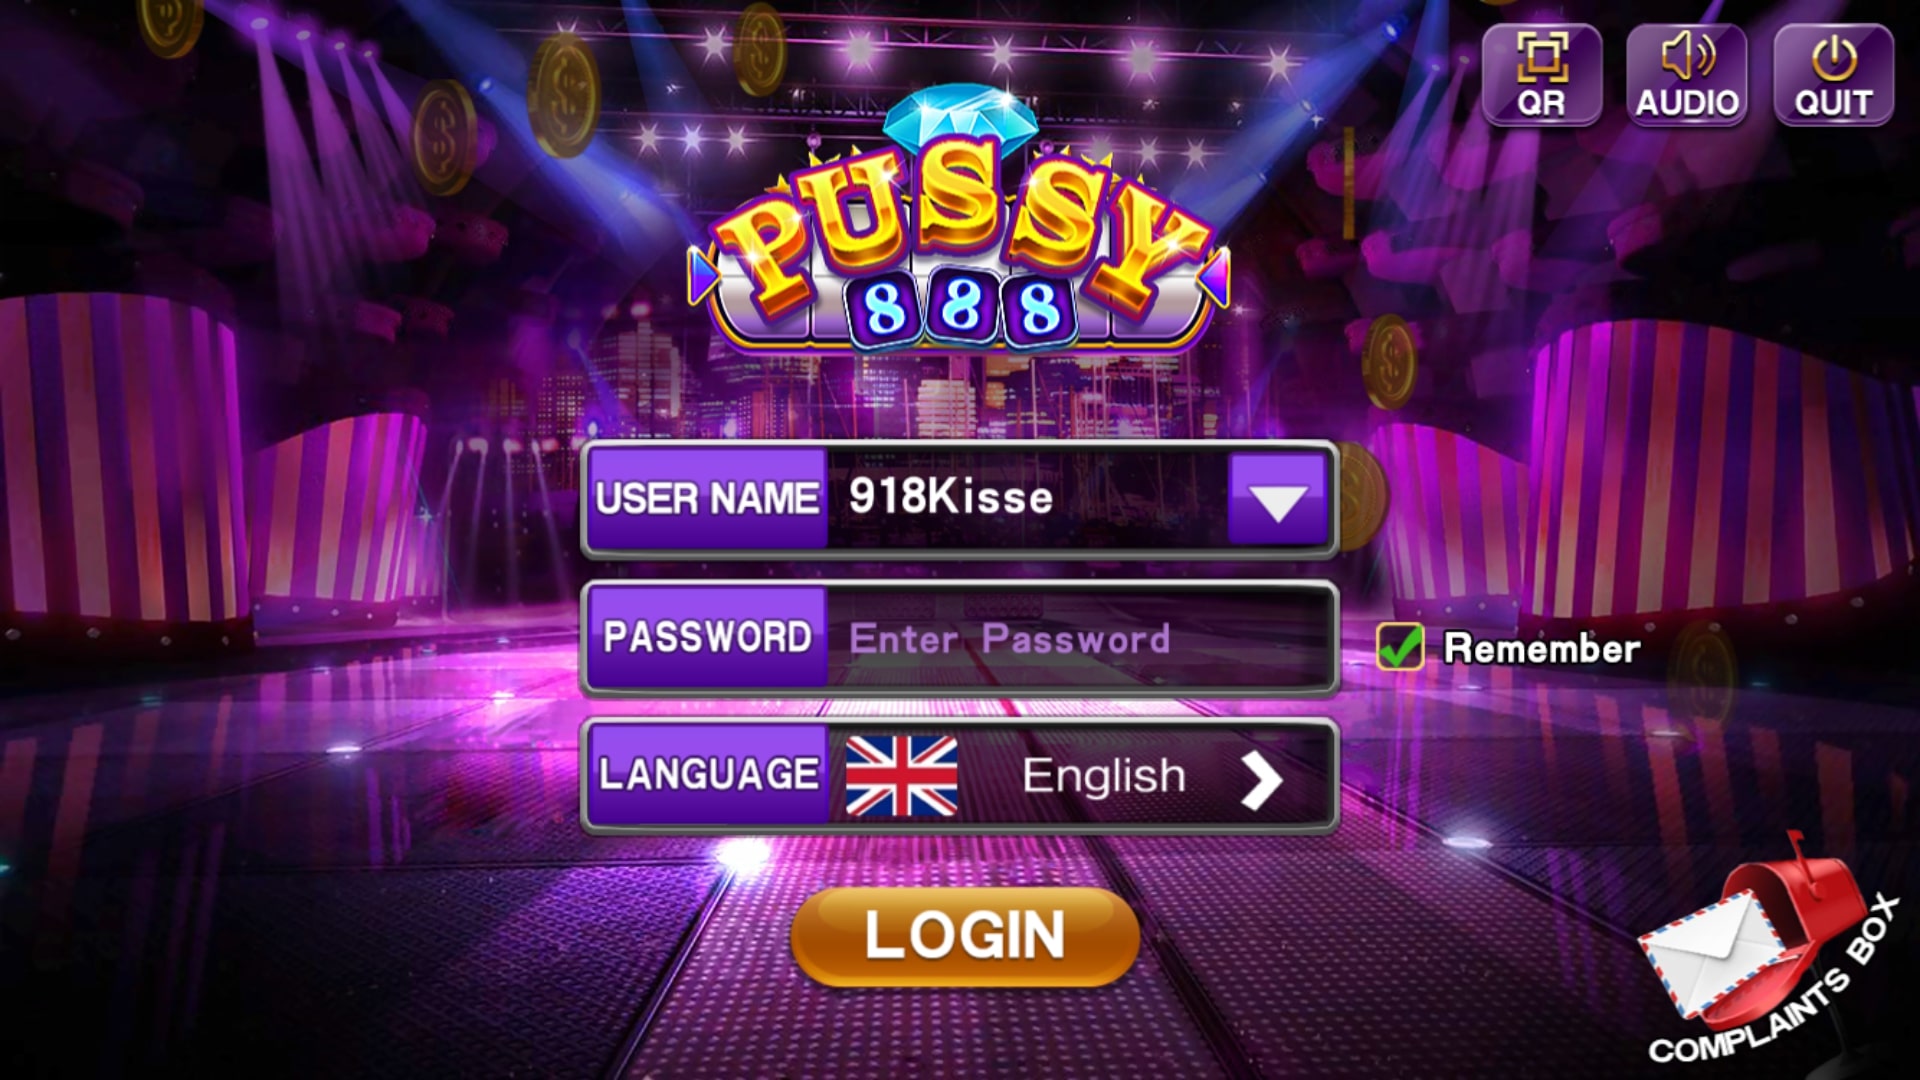 pussy888 login